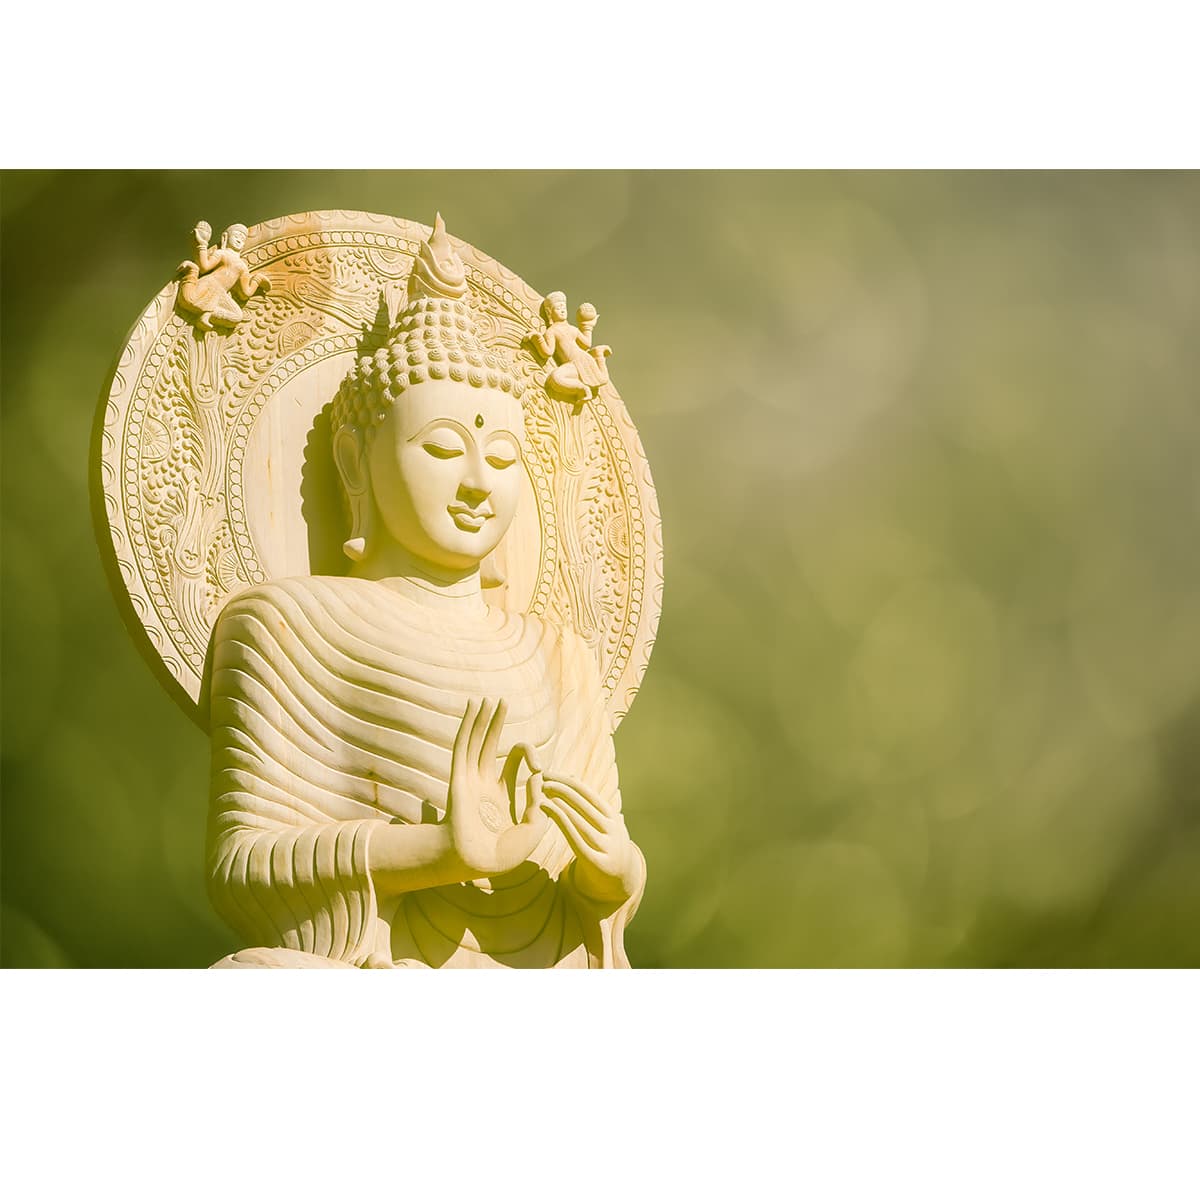 30+ Best Buddha Meditation Dpz, HD Images - NewDPz